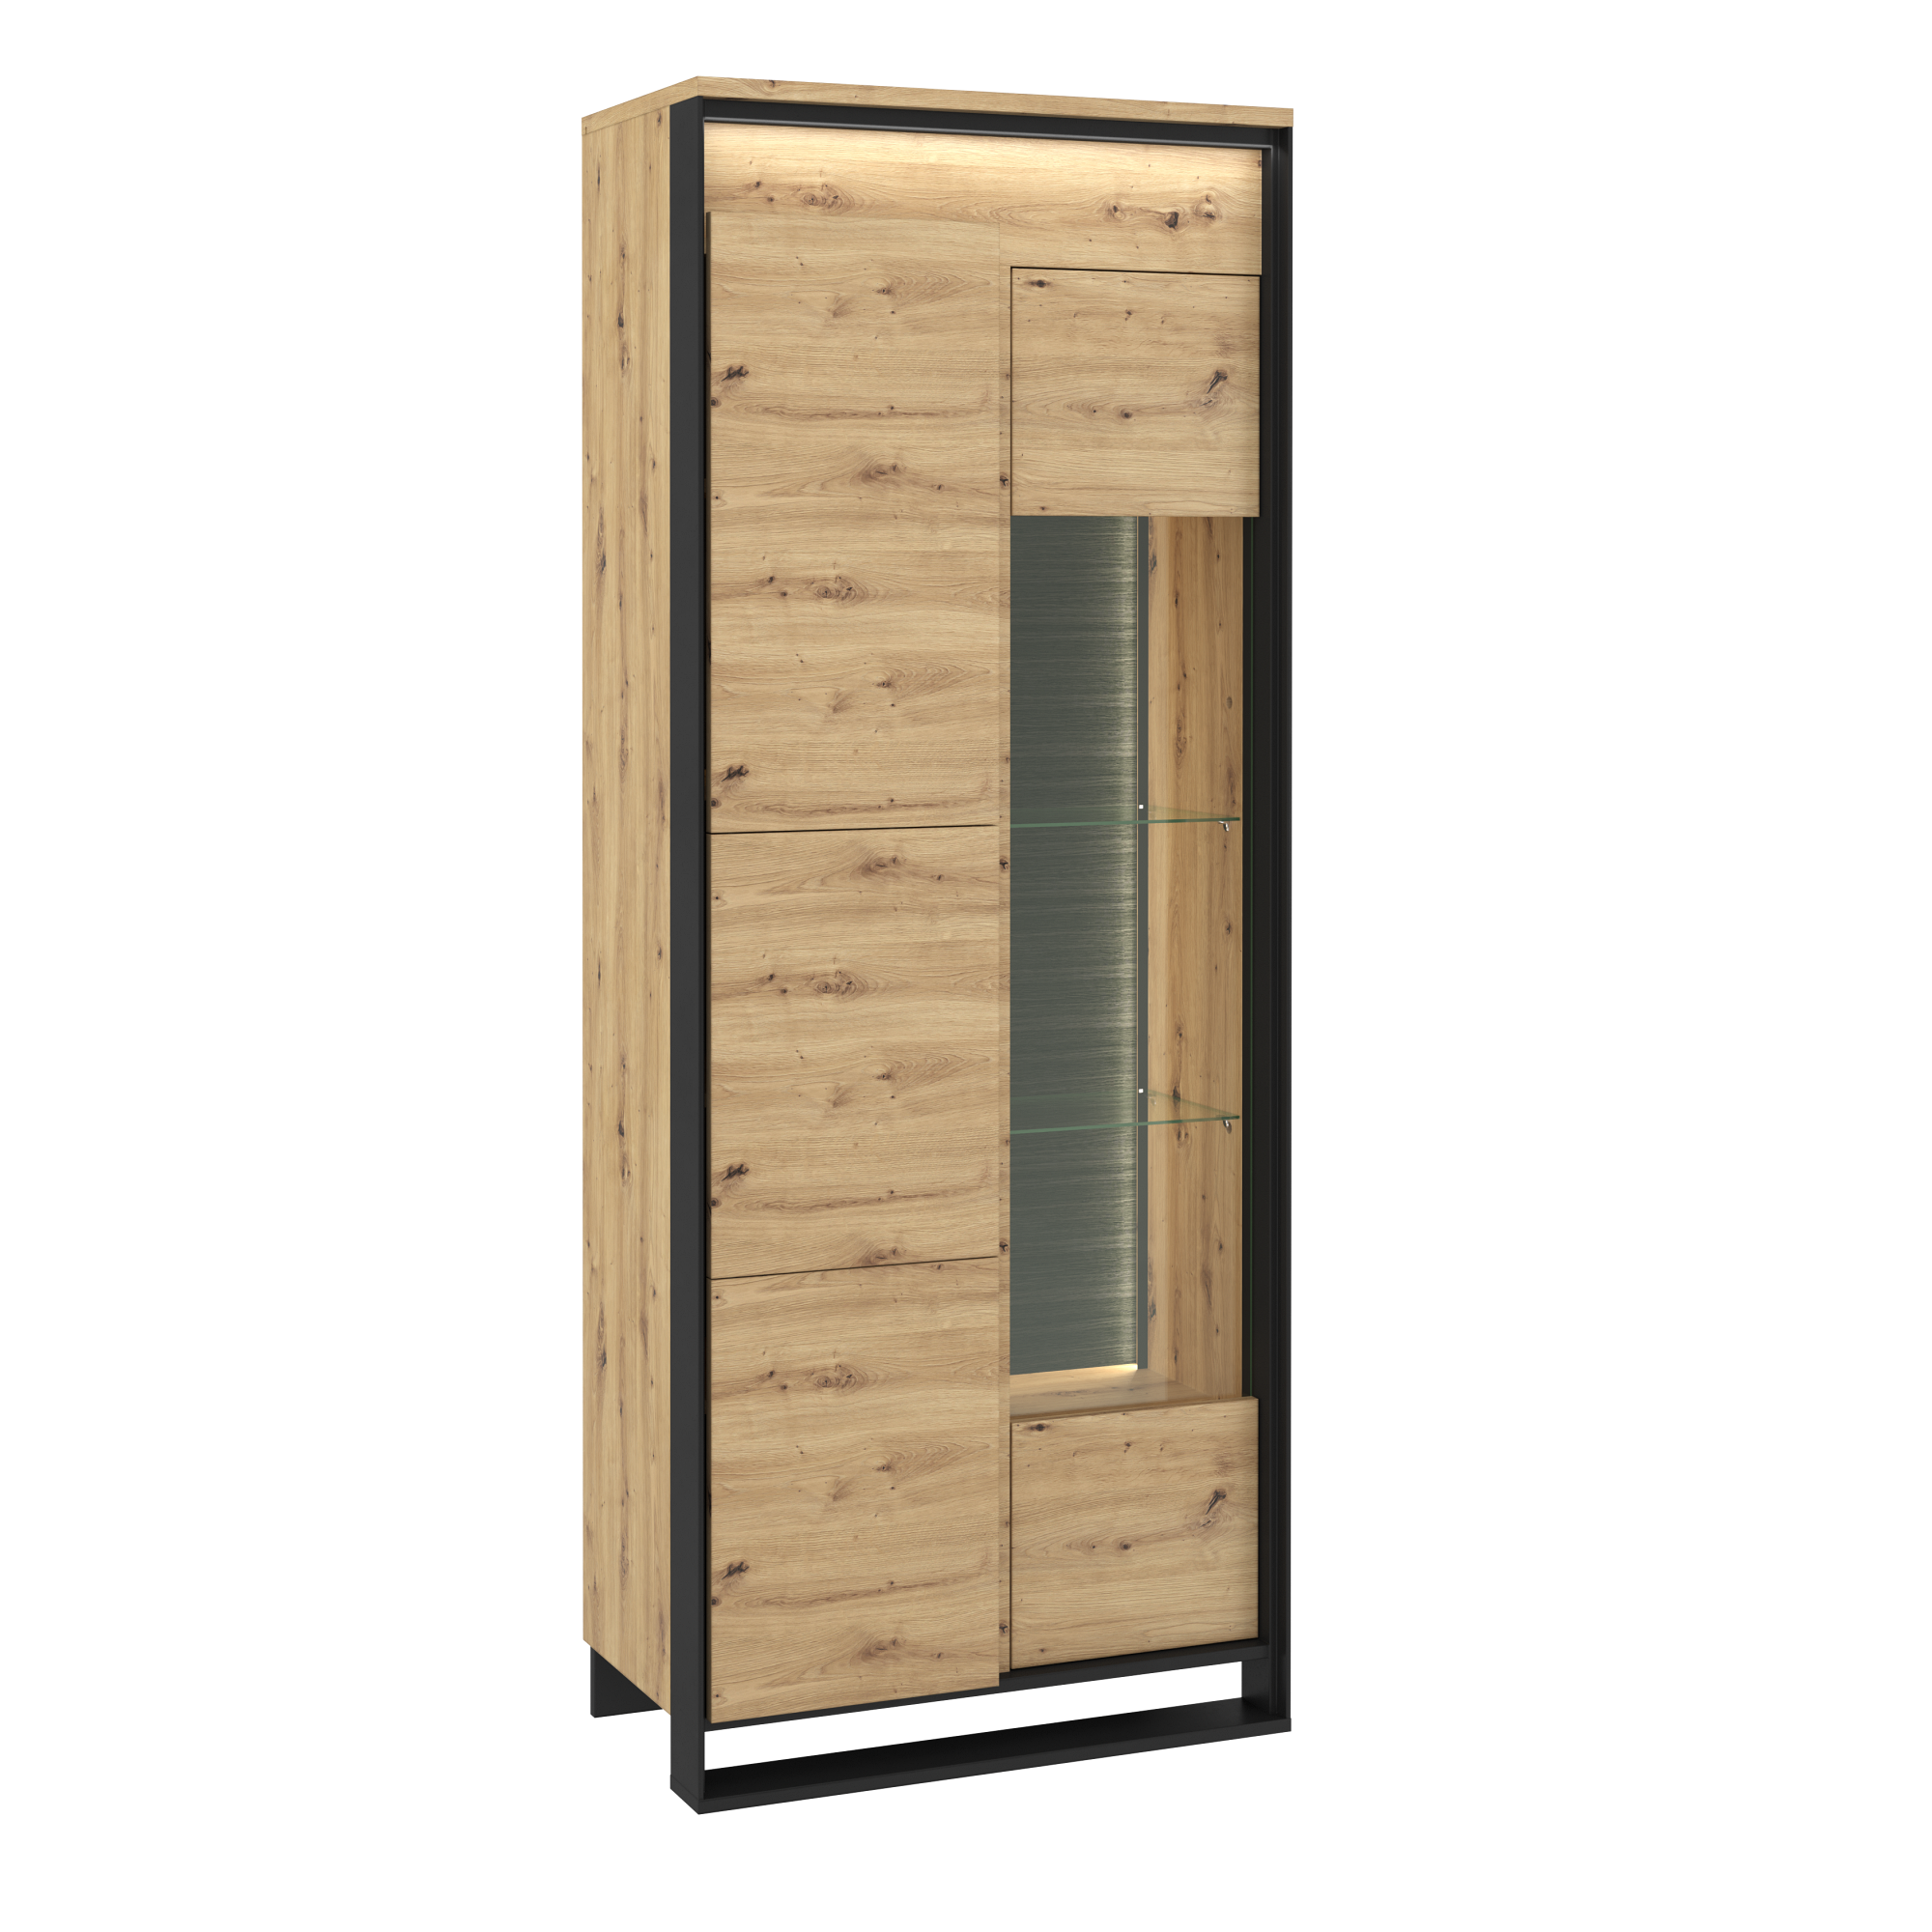 Quant QA-03 2 Doors Tall Display Cabinet - £300.6 - Living Room Display Cabinet 